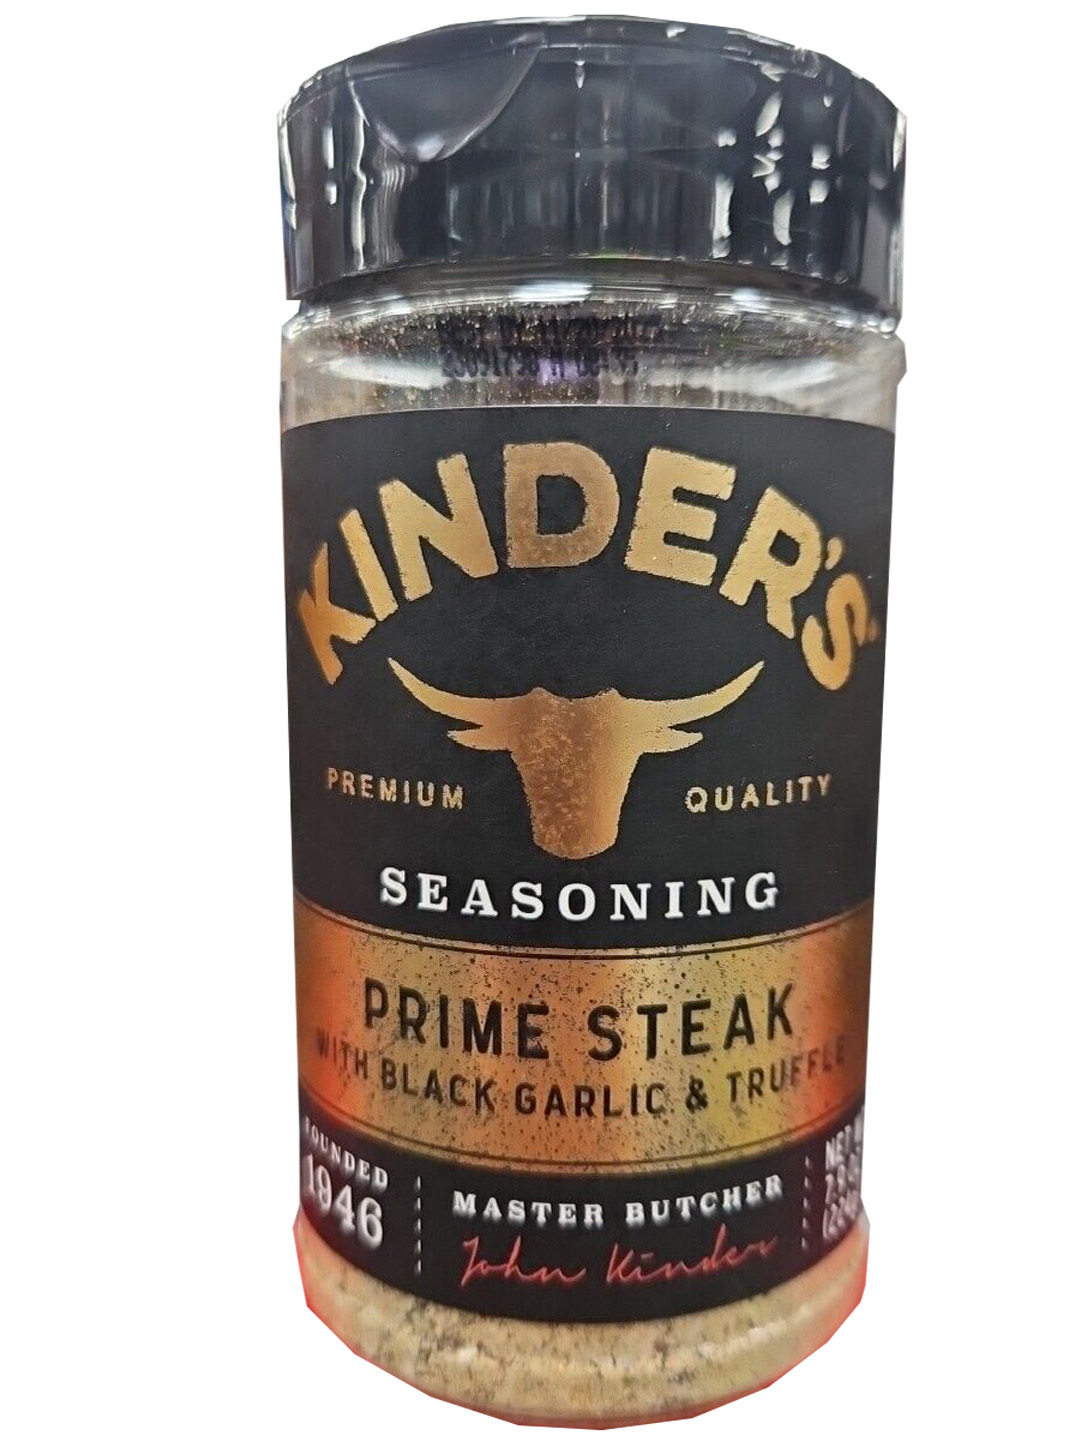 Kinder's Prime Steak With Black Garlic & Truffle Premium Seasoning No MSG 7.9 Oz - $14.30